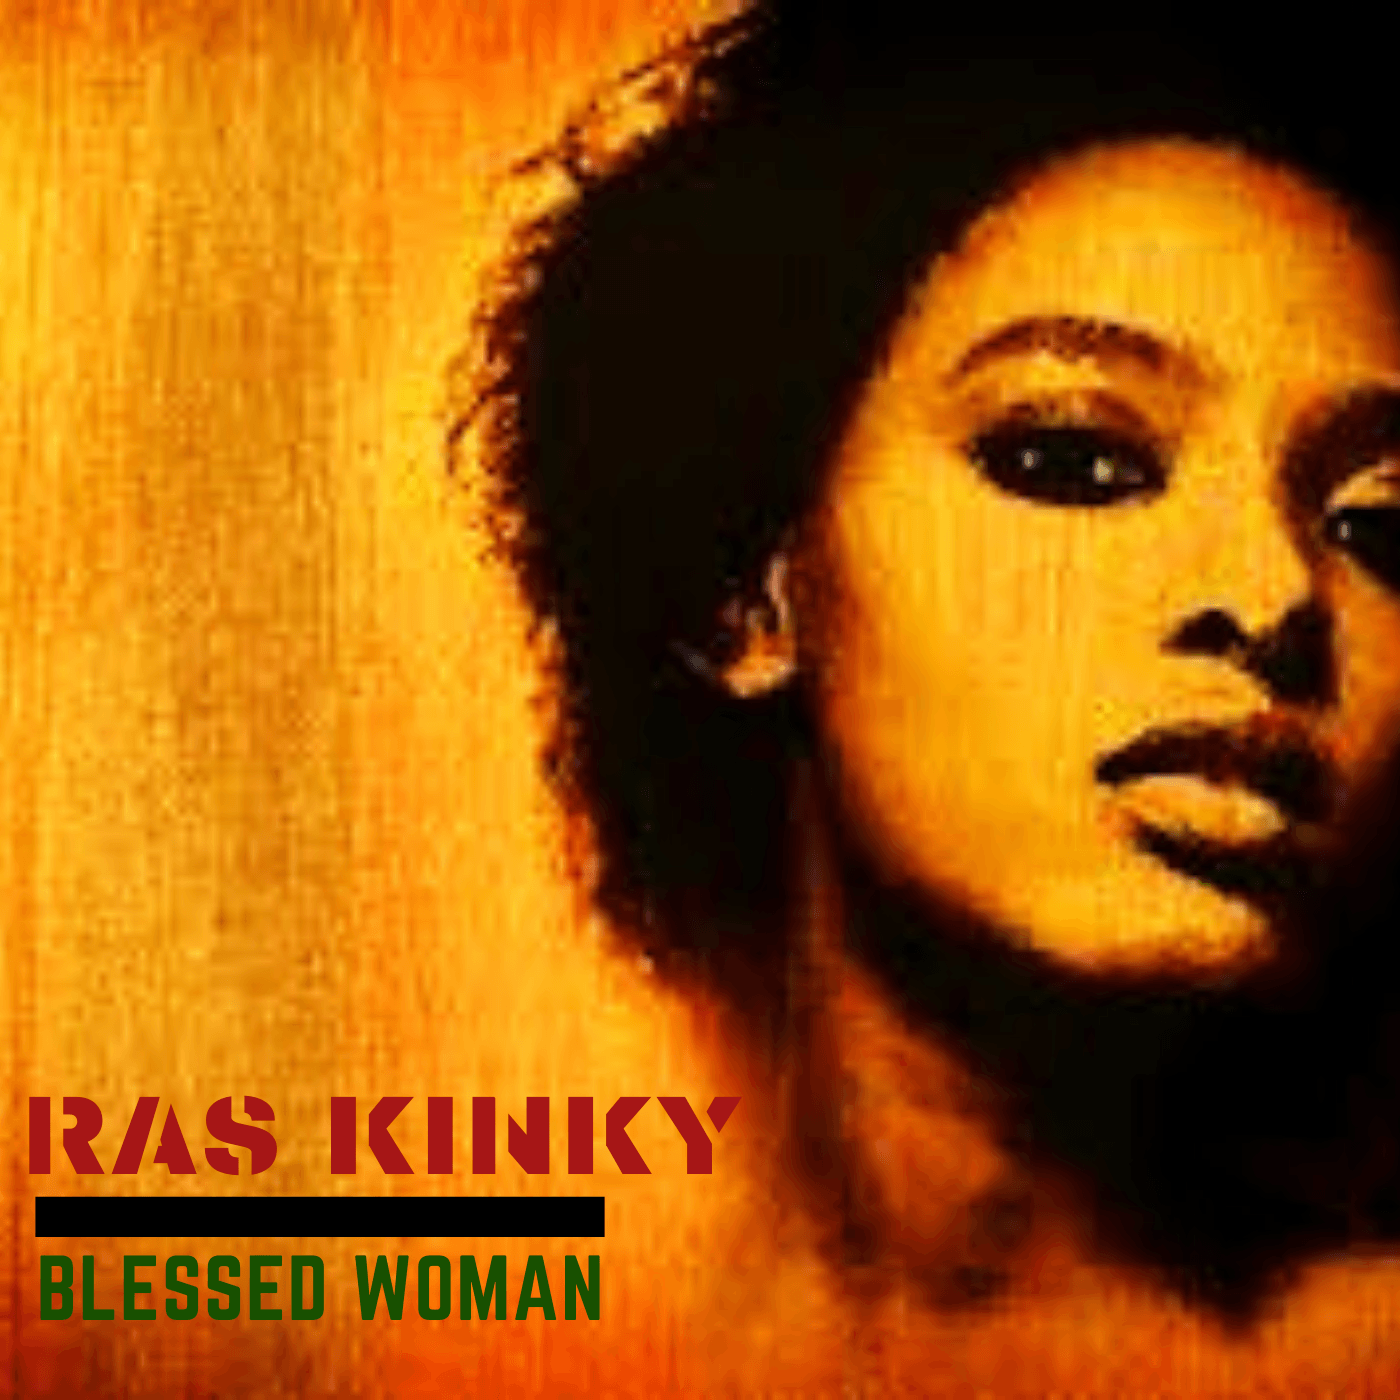 Ras Kinky – “Blessed Woman”